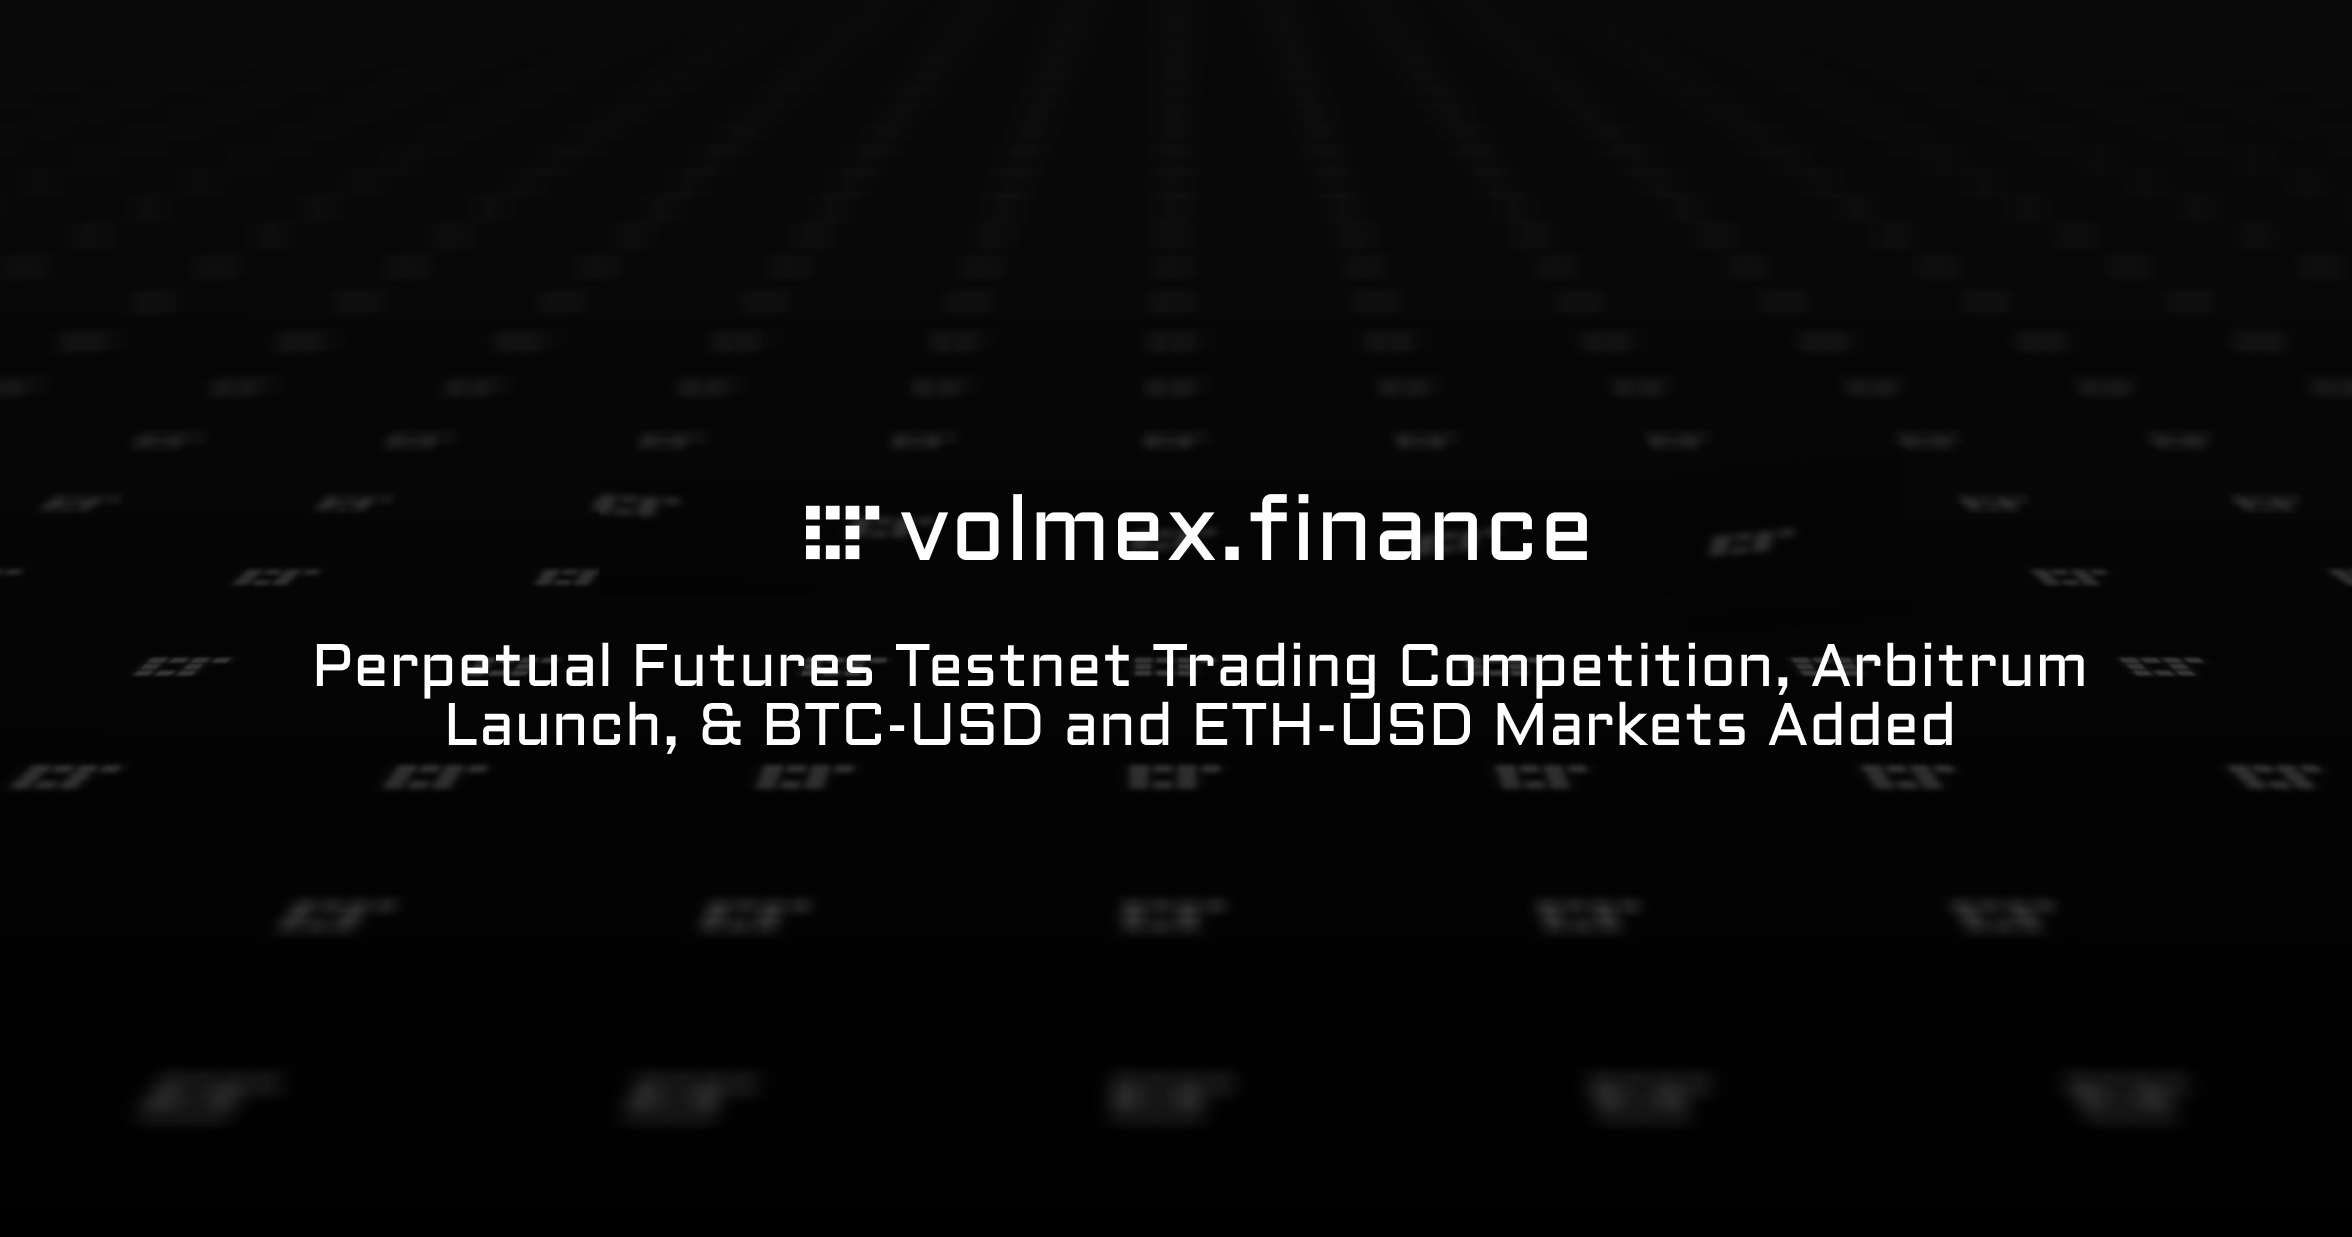 Volmex Perpetuals Testnet Trading Competition, Arbitrum Testnet Deployment, BTC-USD ETH-USD Perpetual Markets